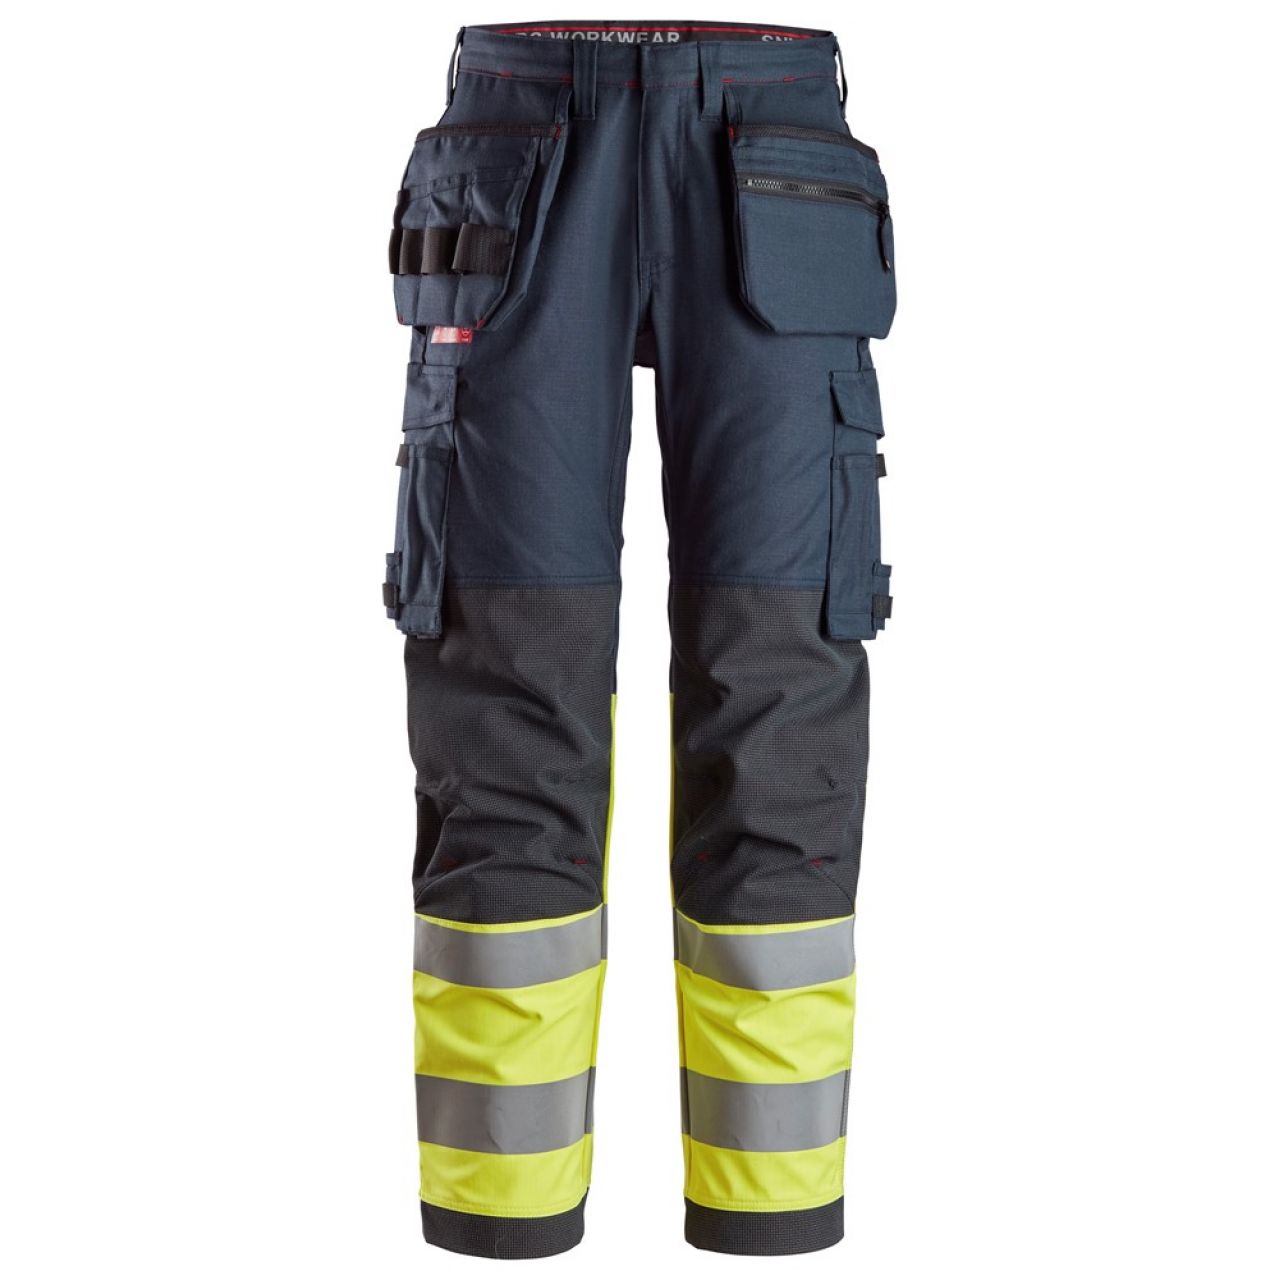 6263 Pantalones largos de trabajo de alta visibilidad clase 1 con bolsillos flotantes ProtecWork azul marino-amarillo talla 116